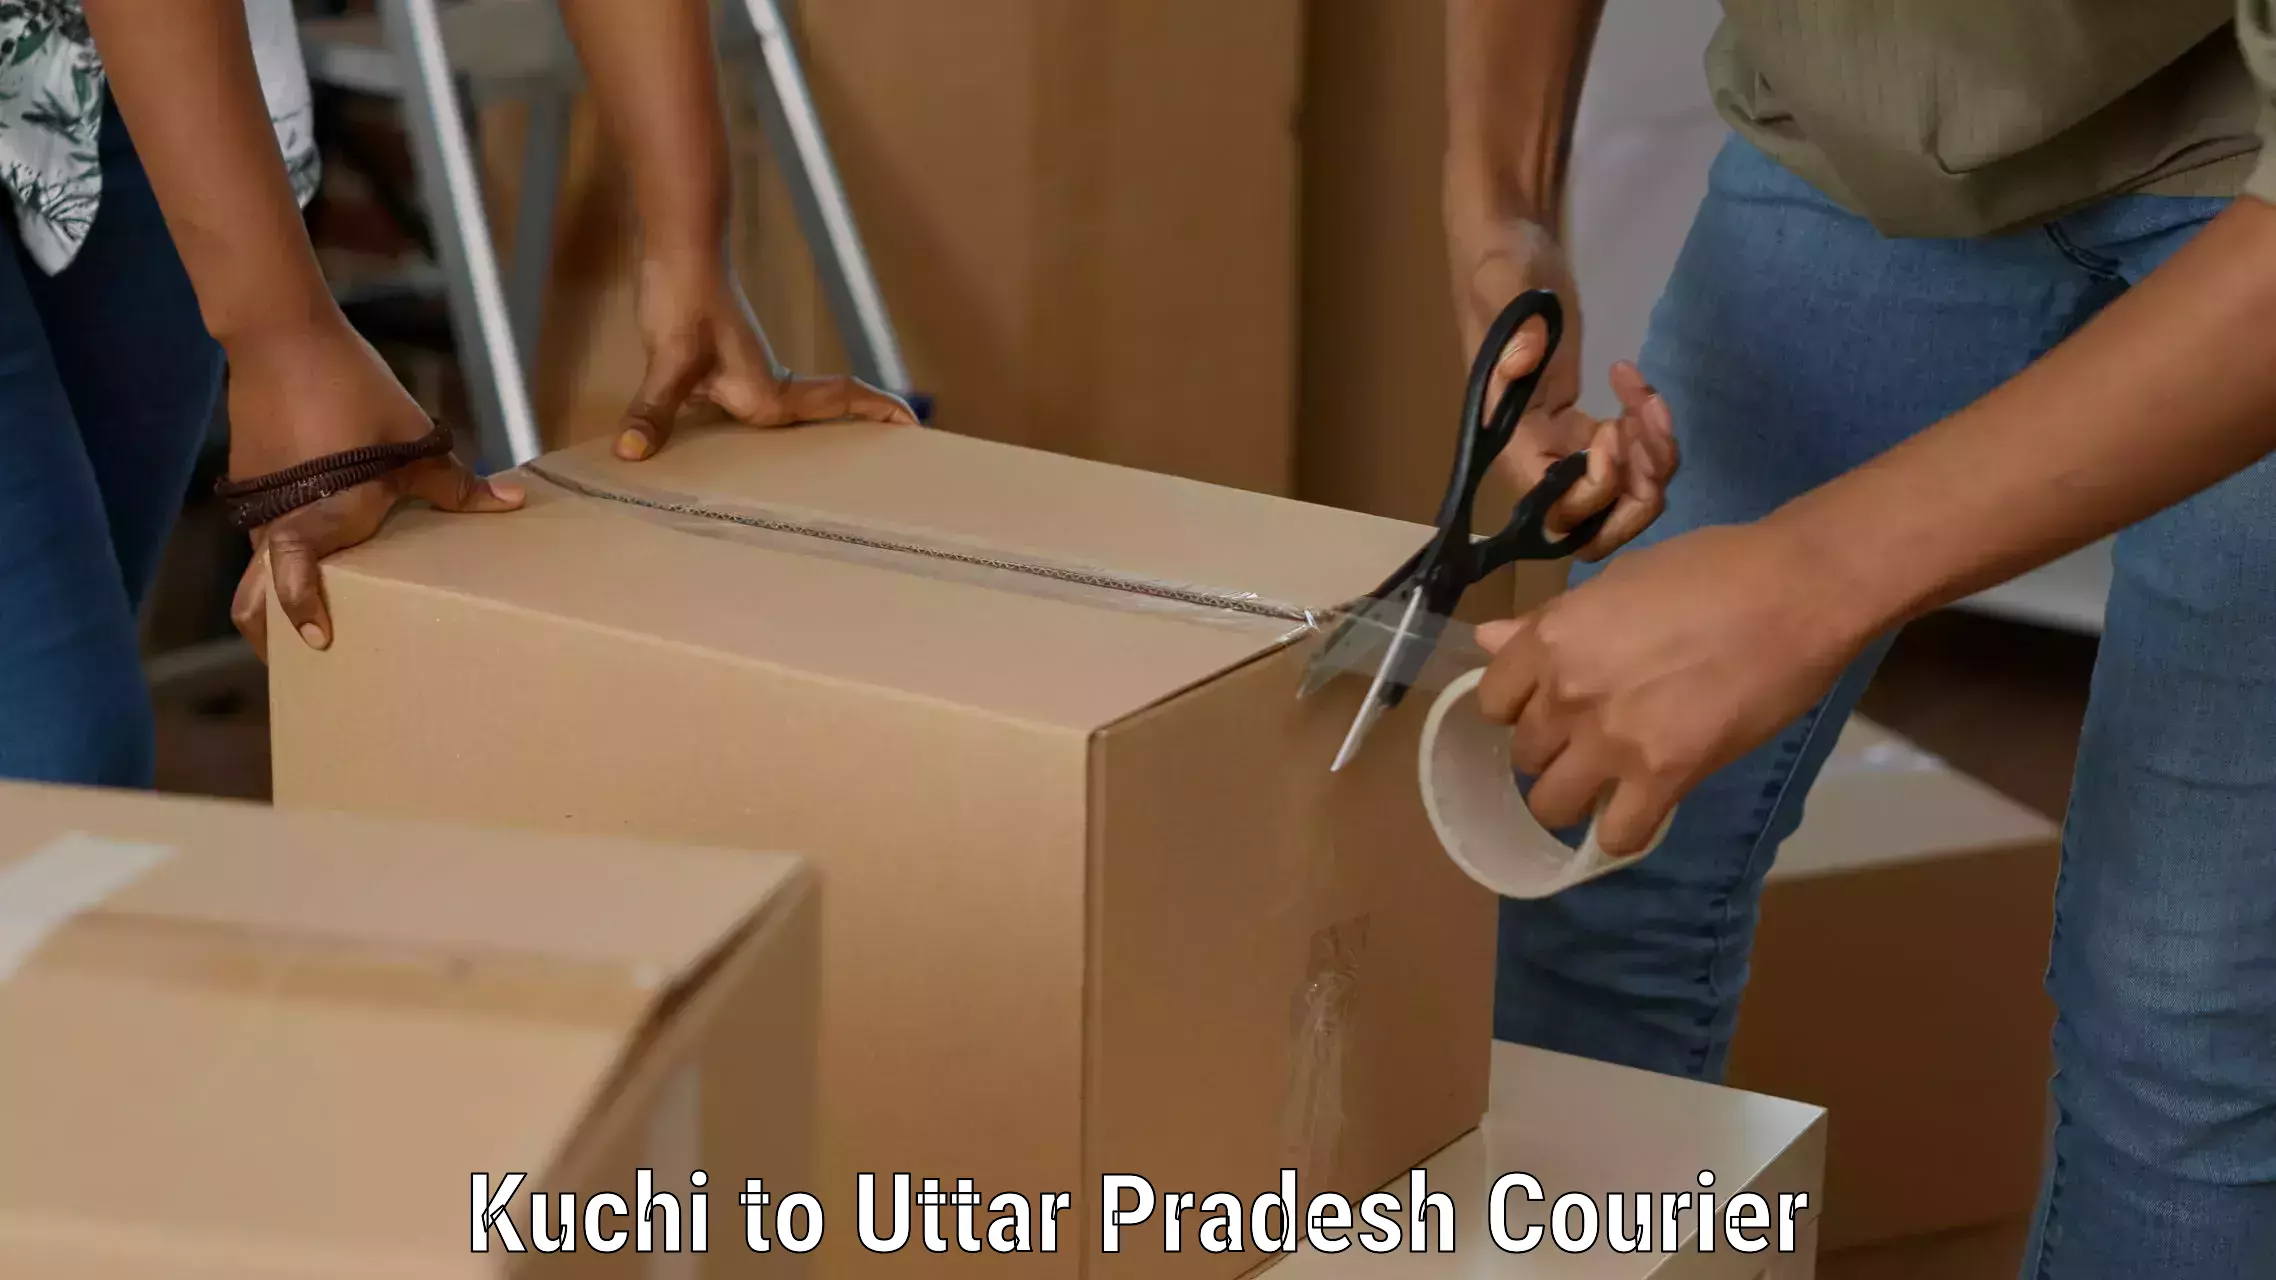 Enhanced tracking features Kuchi to Uttar Pradesh